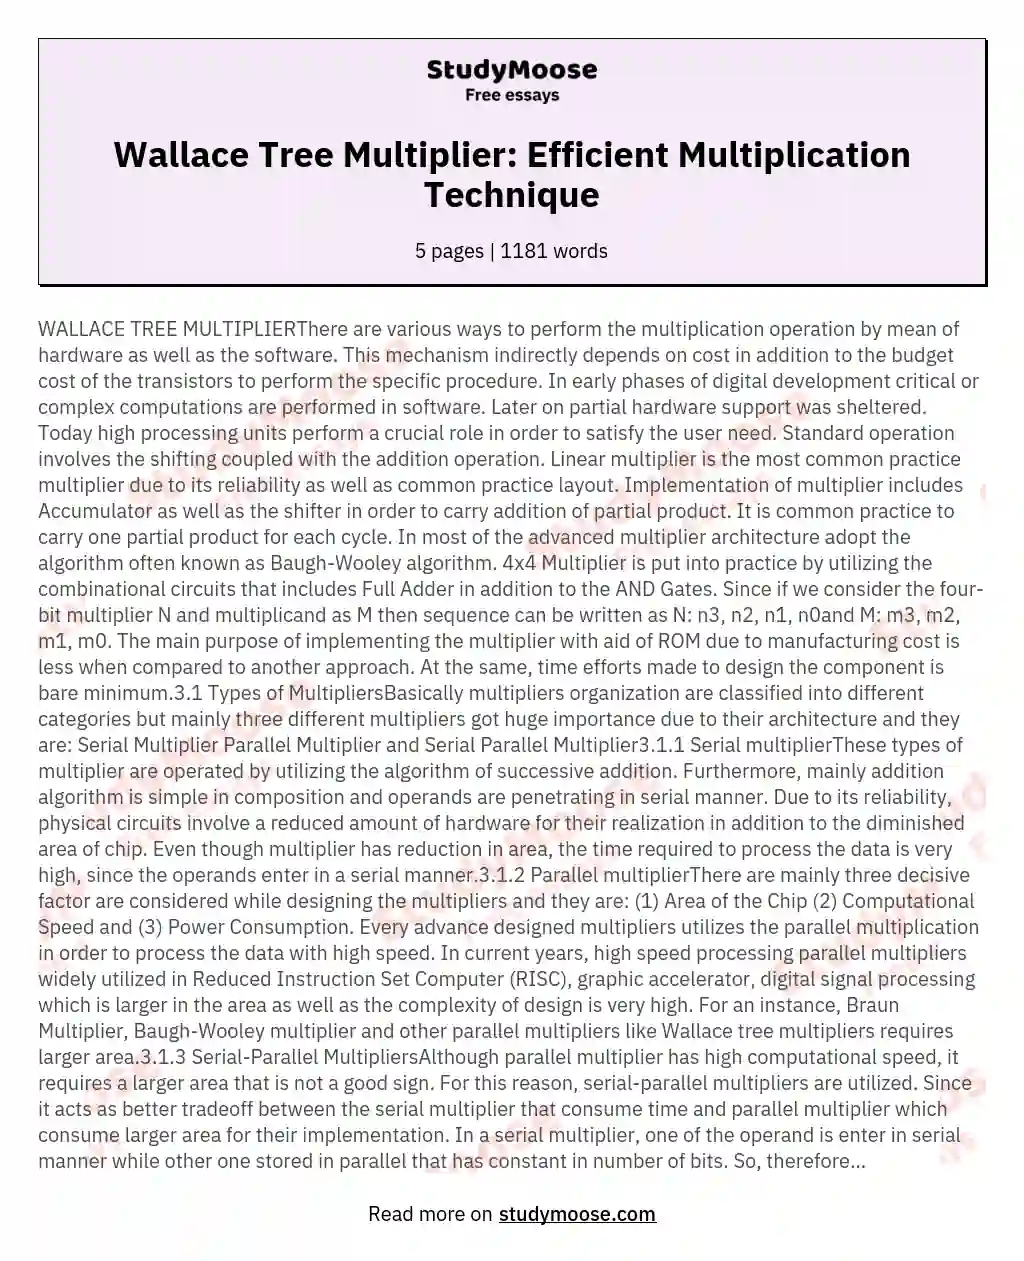 Wallace Tree Multiplier: Efficient Multiplication Technique essay